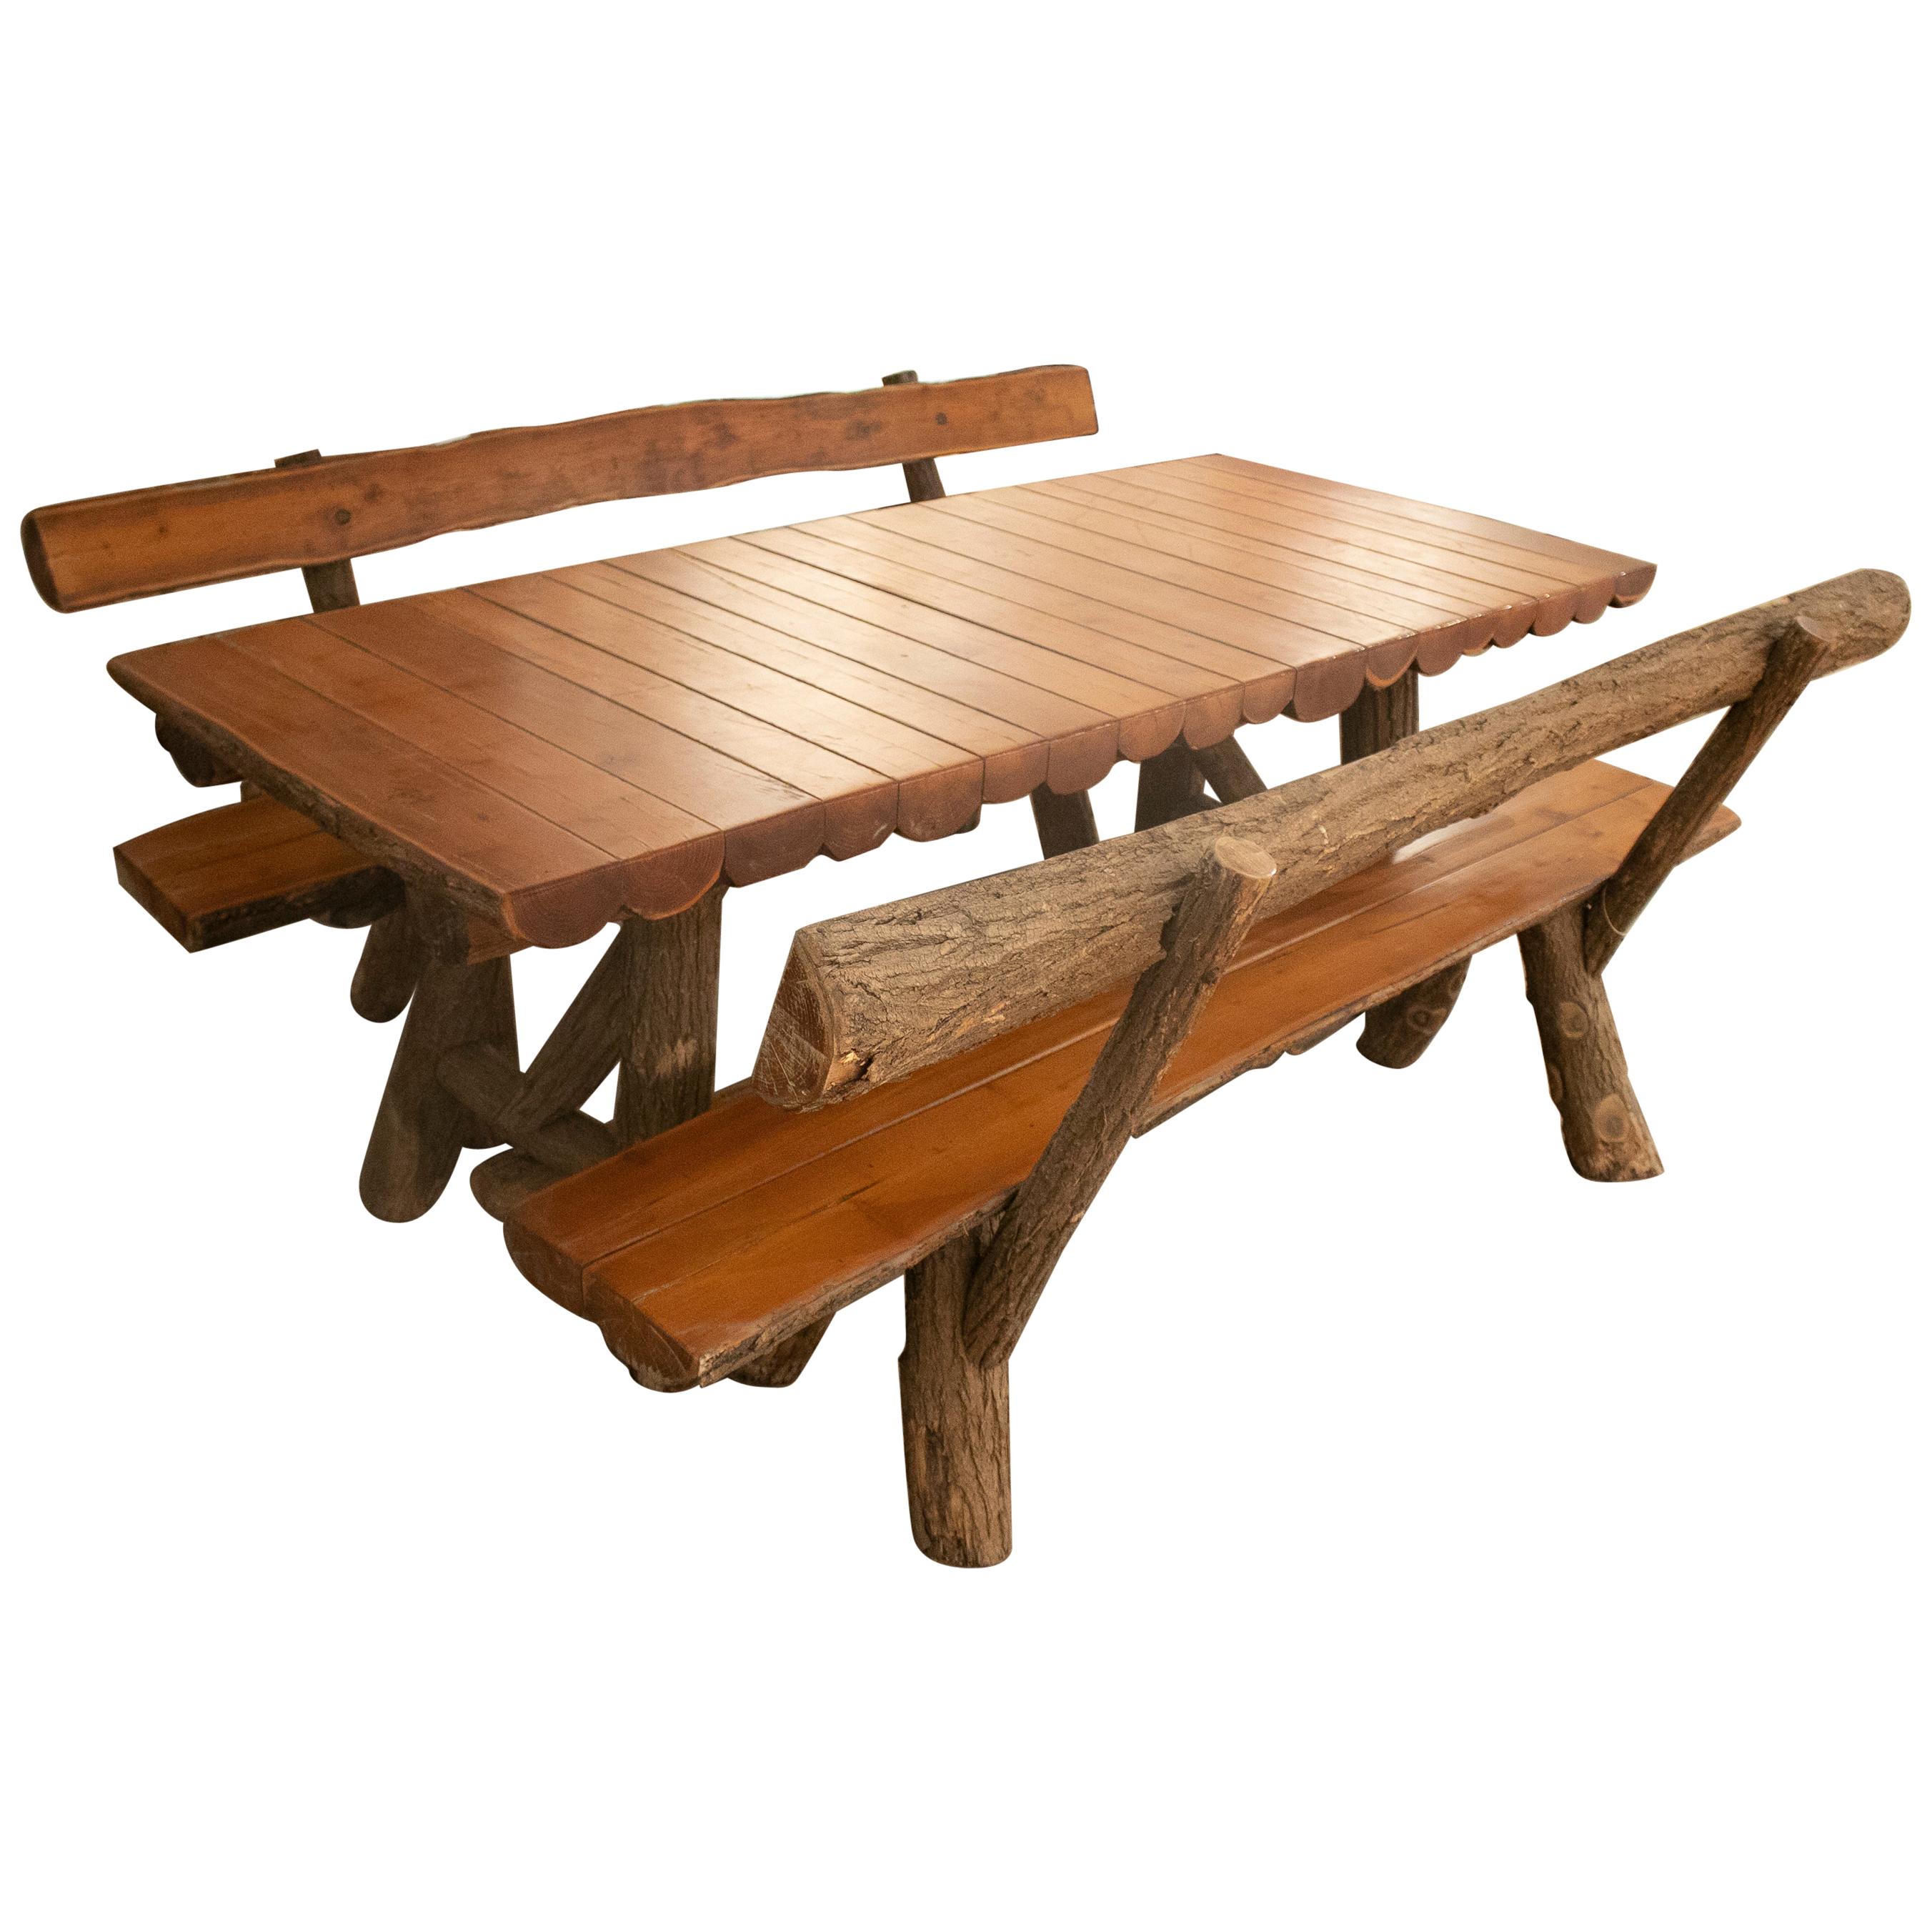 1970s Spanish Handmade Garden Wooden Table w/ Benches